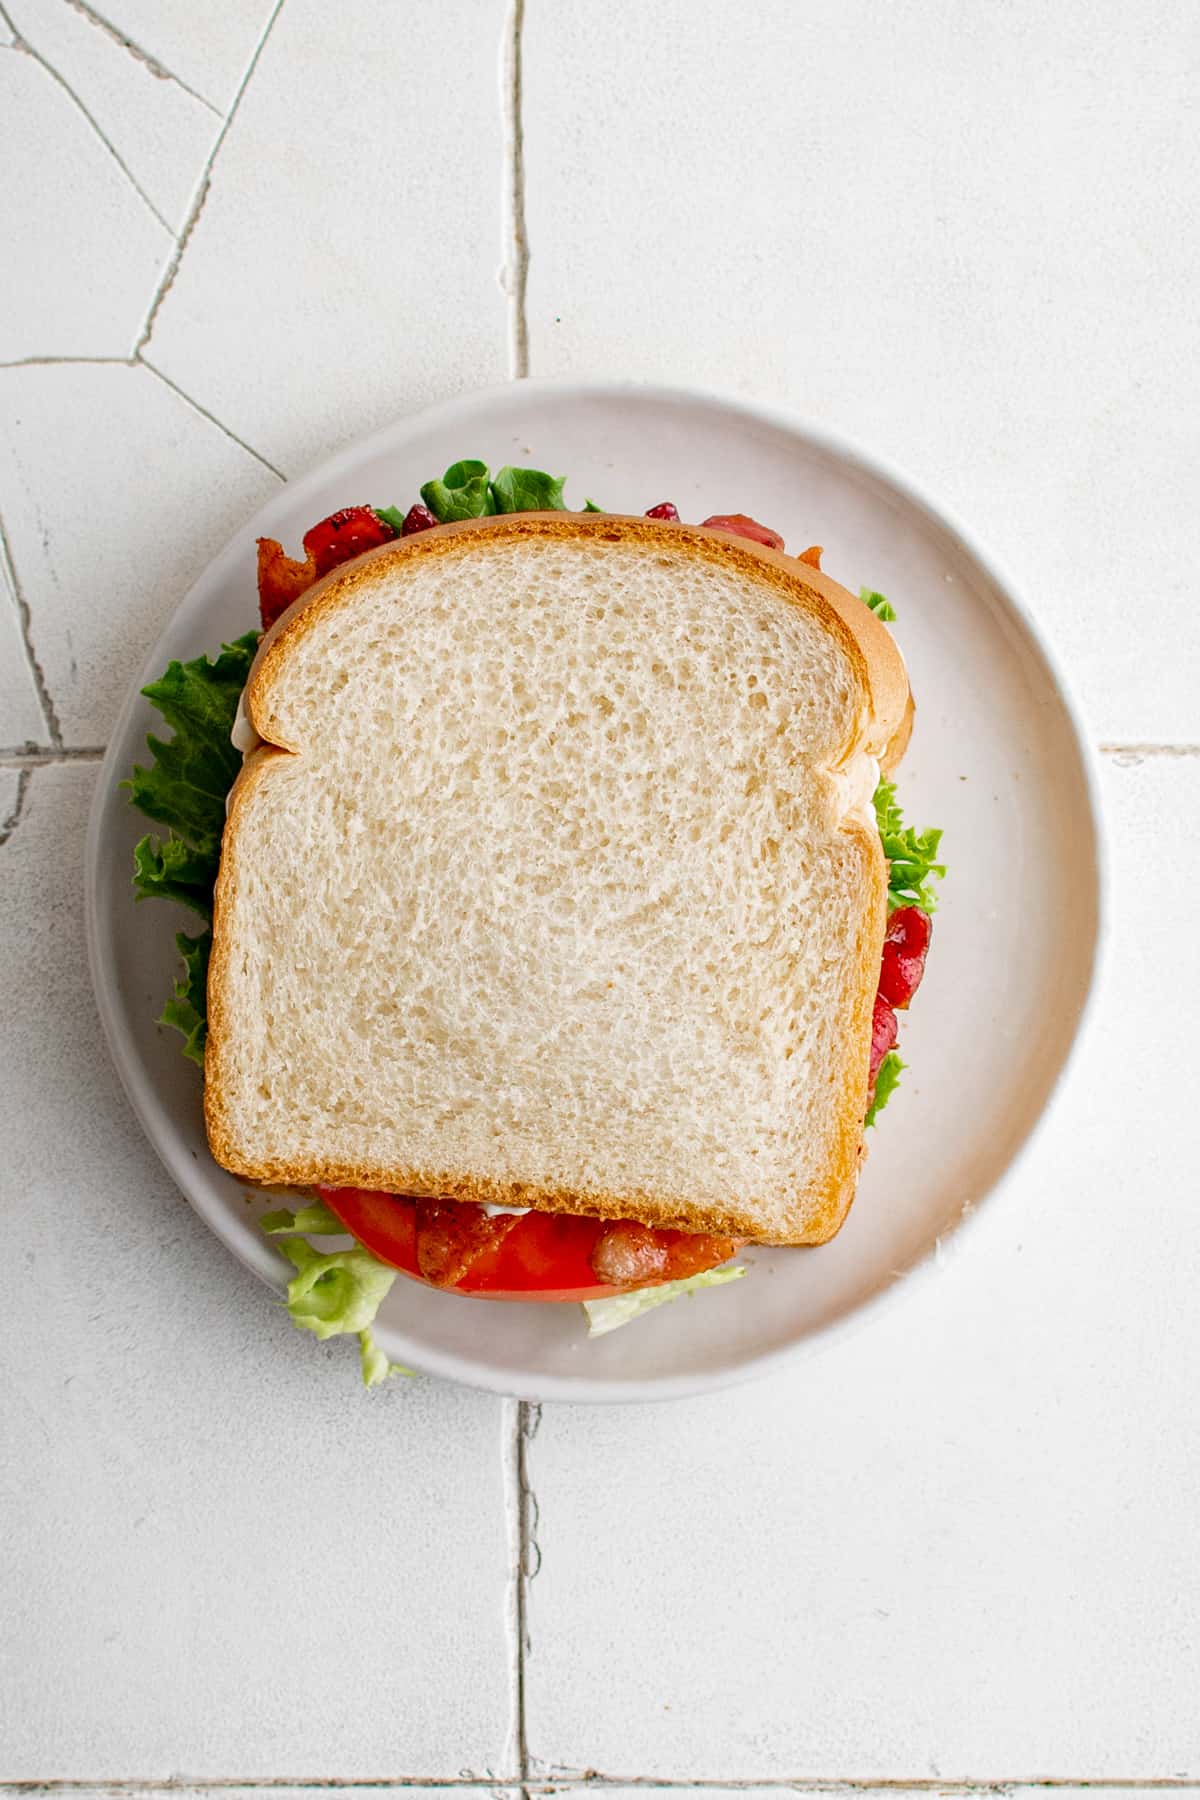 https://www.thecookierookie.com/wp-content/uploads/2022/09/How-To-BLT-Sandwich-8.jpg